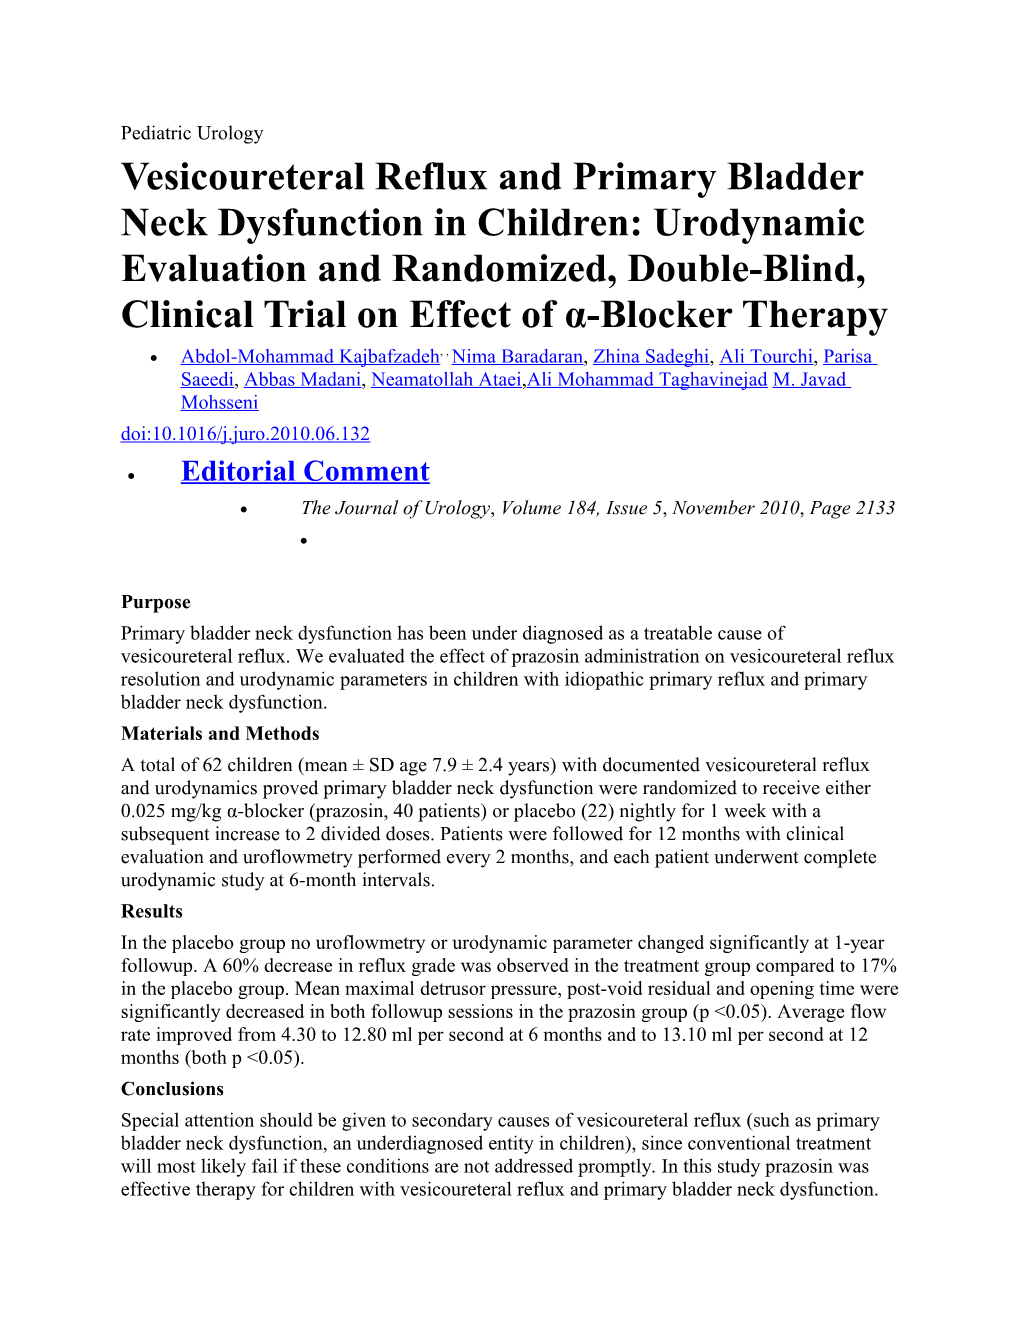 Vesicoureteral Reflux and Primary Bladder Neck Dysfunction in Children: Urodynamic Evaluation